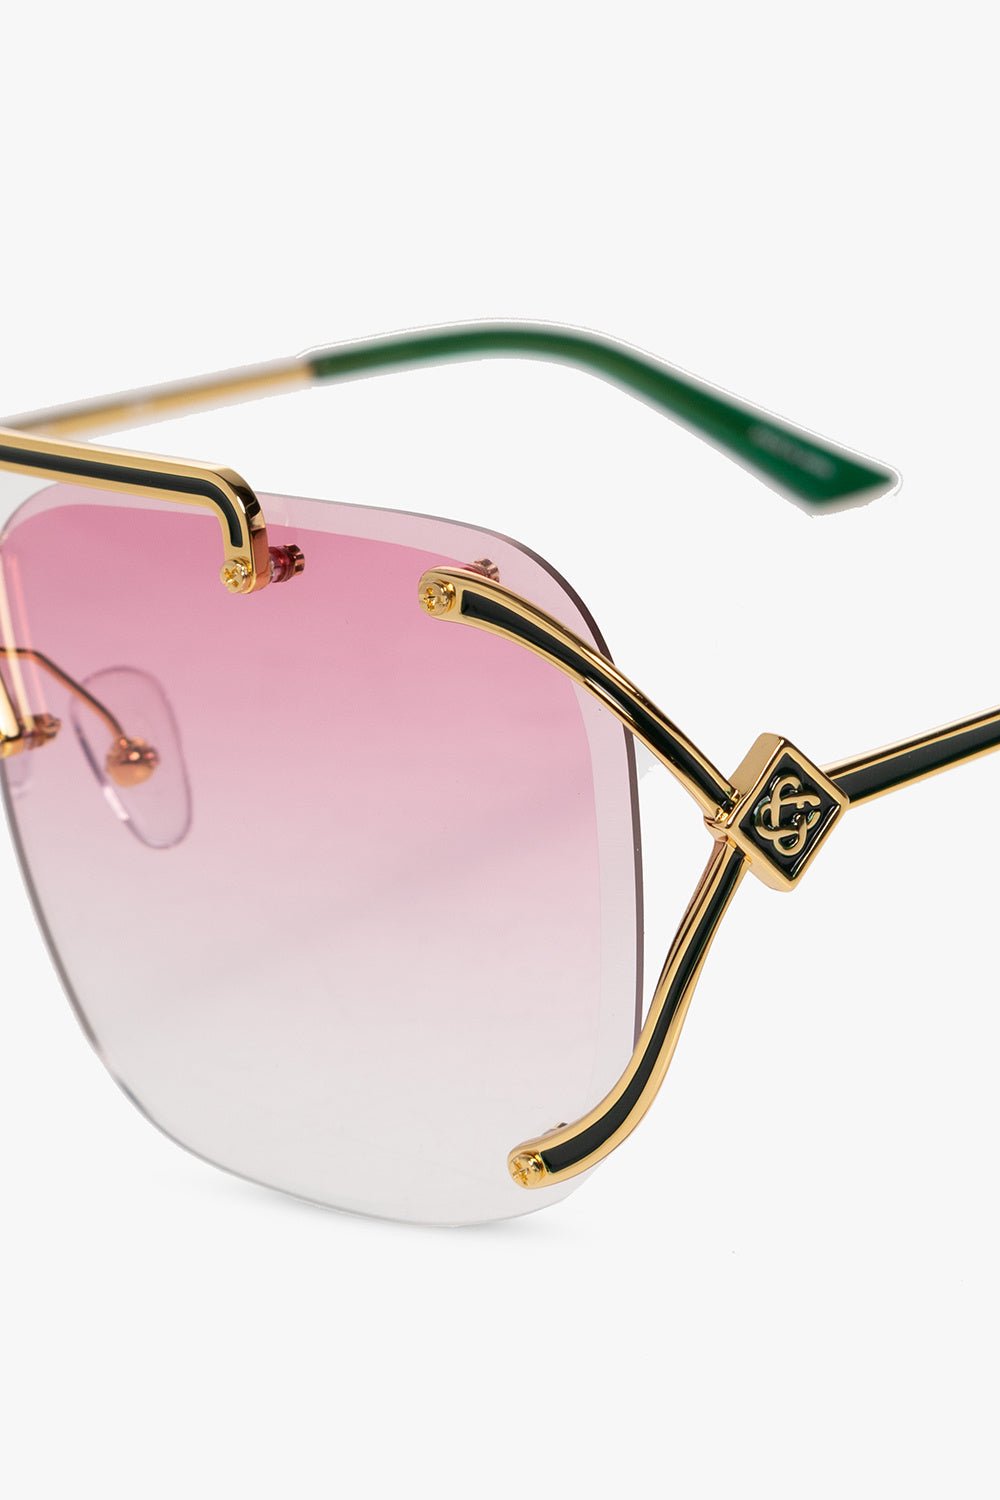 Casablanca Sunglasses Acetate Metal Goldgreenpink - AL Capone PremiumAccessoriesSunglasses1149-5